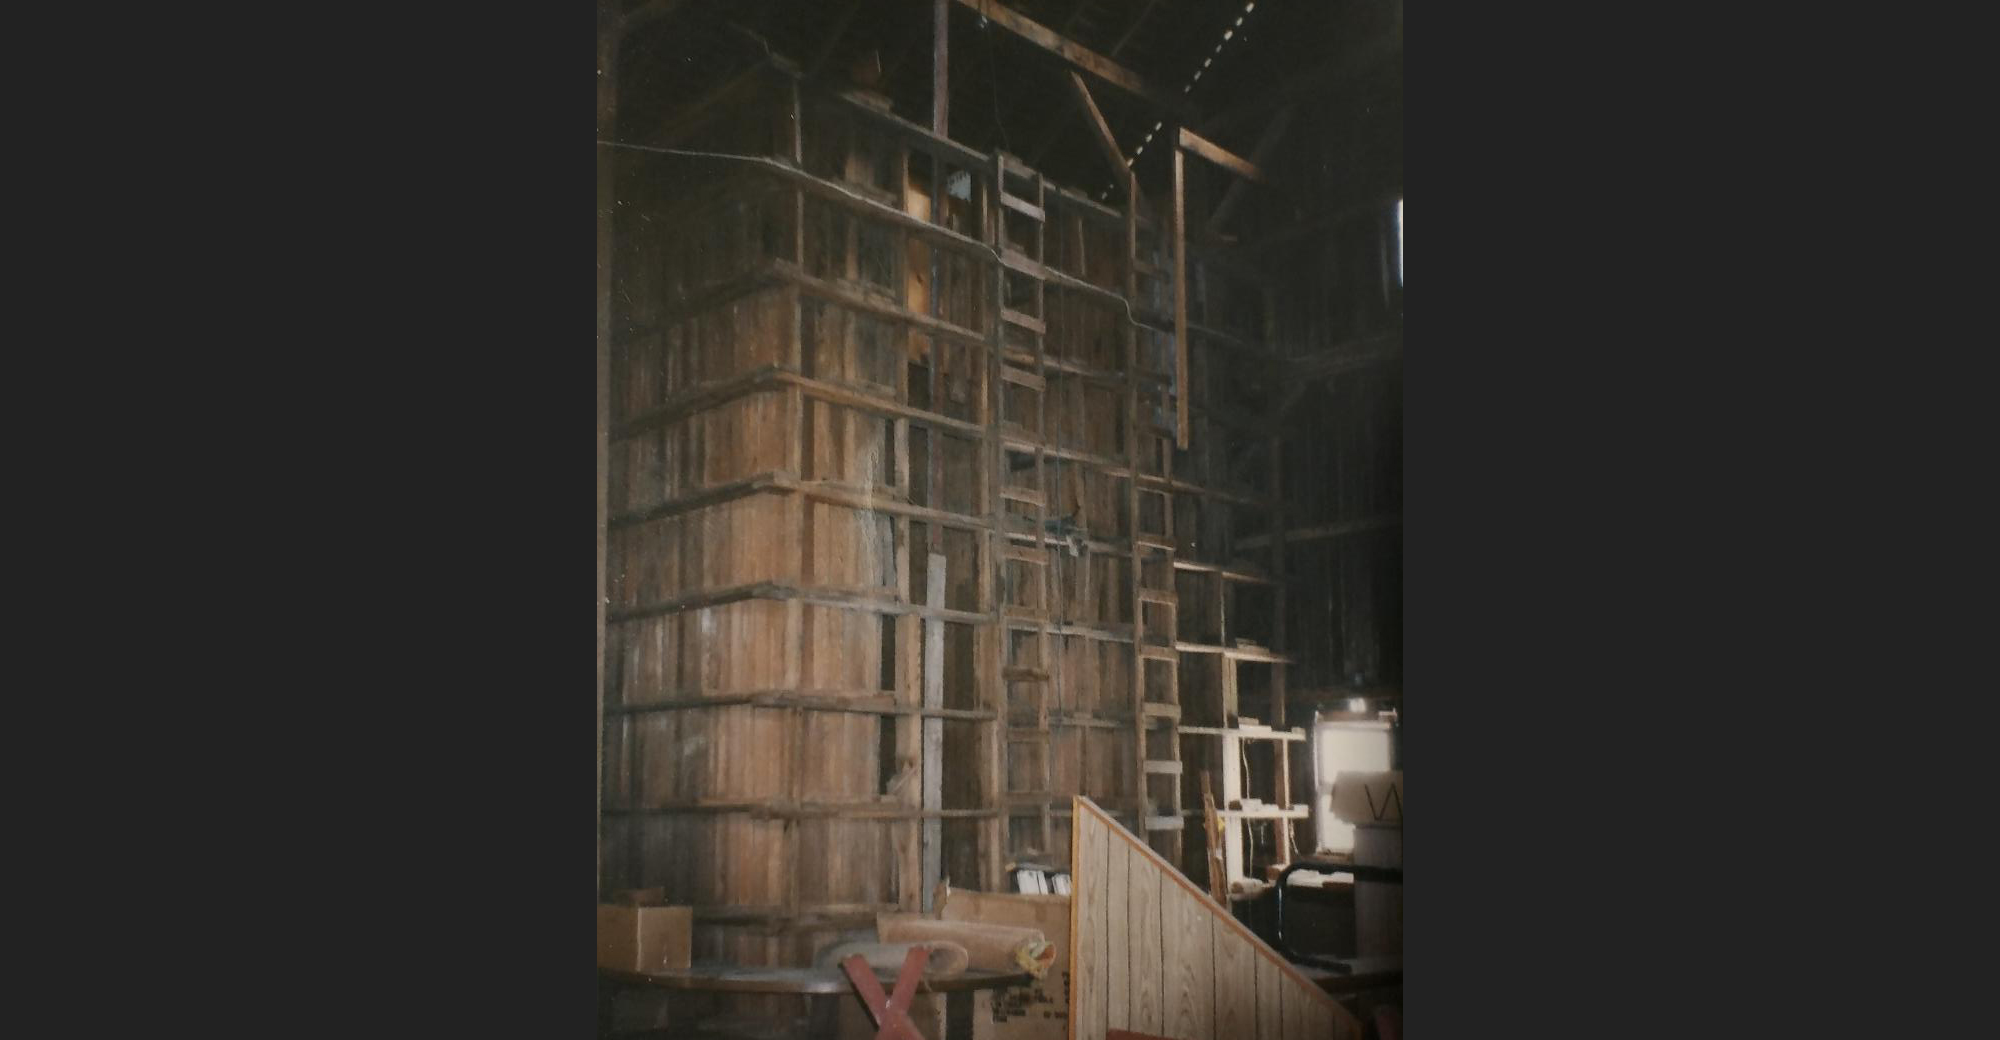 The silo, companion to barns